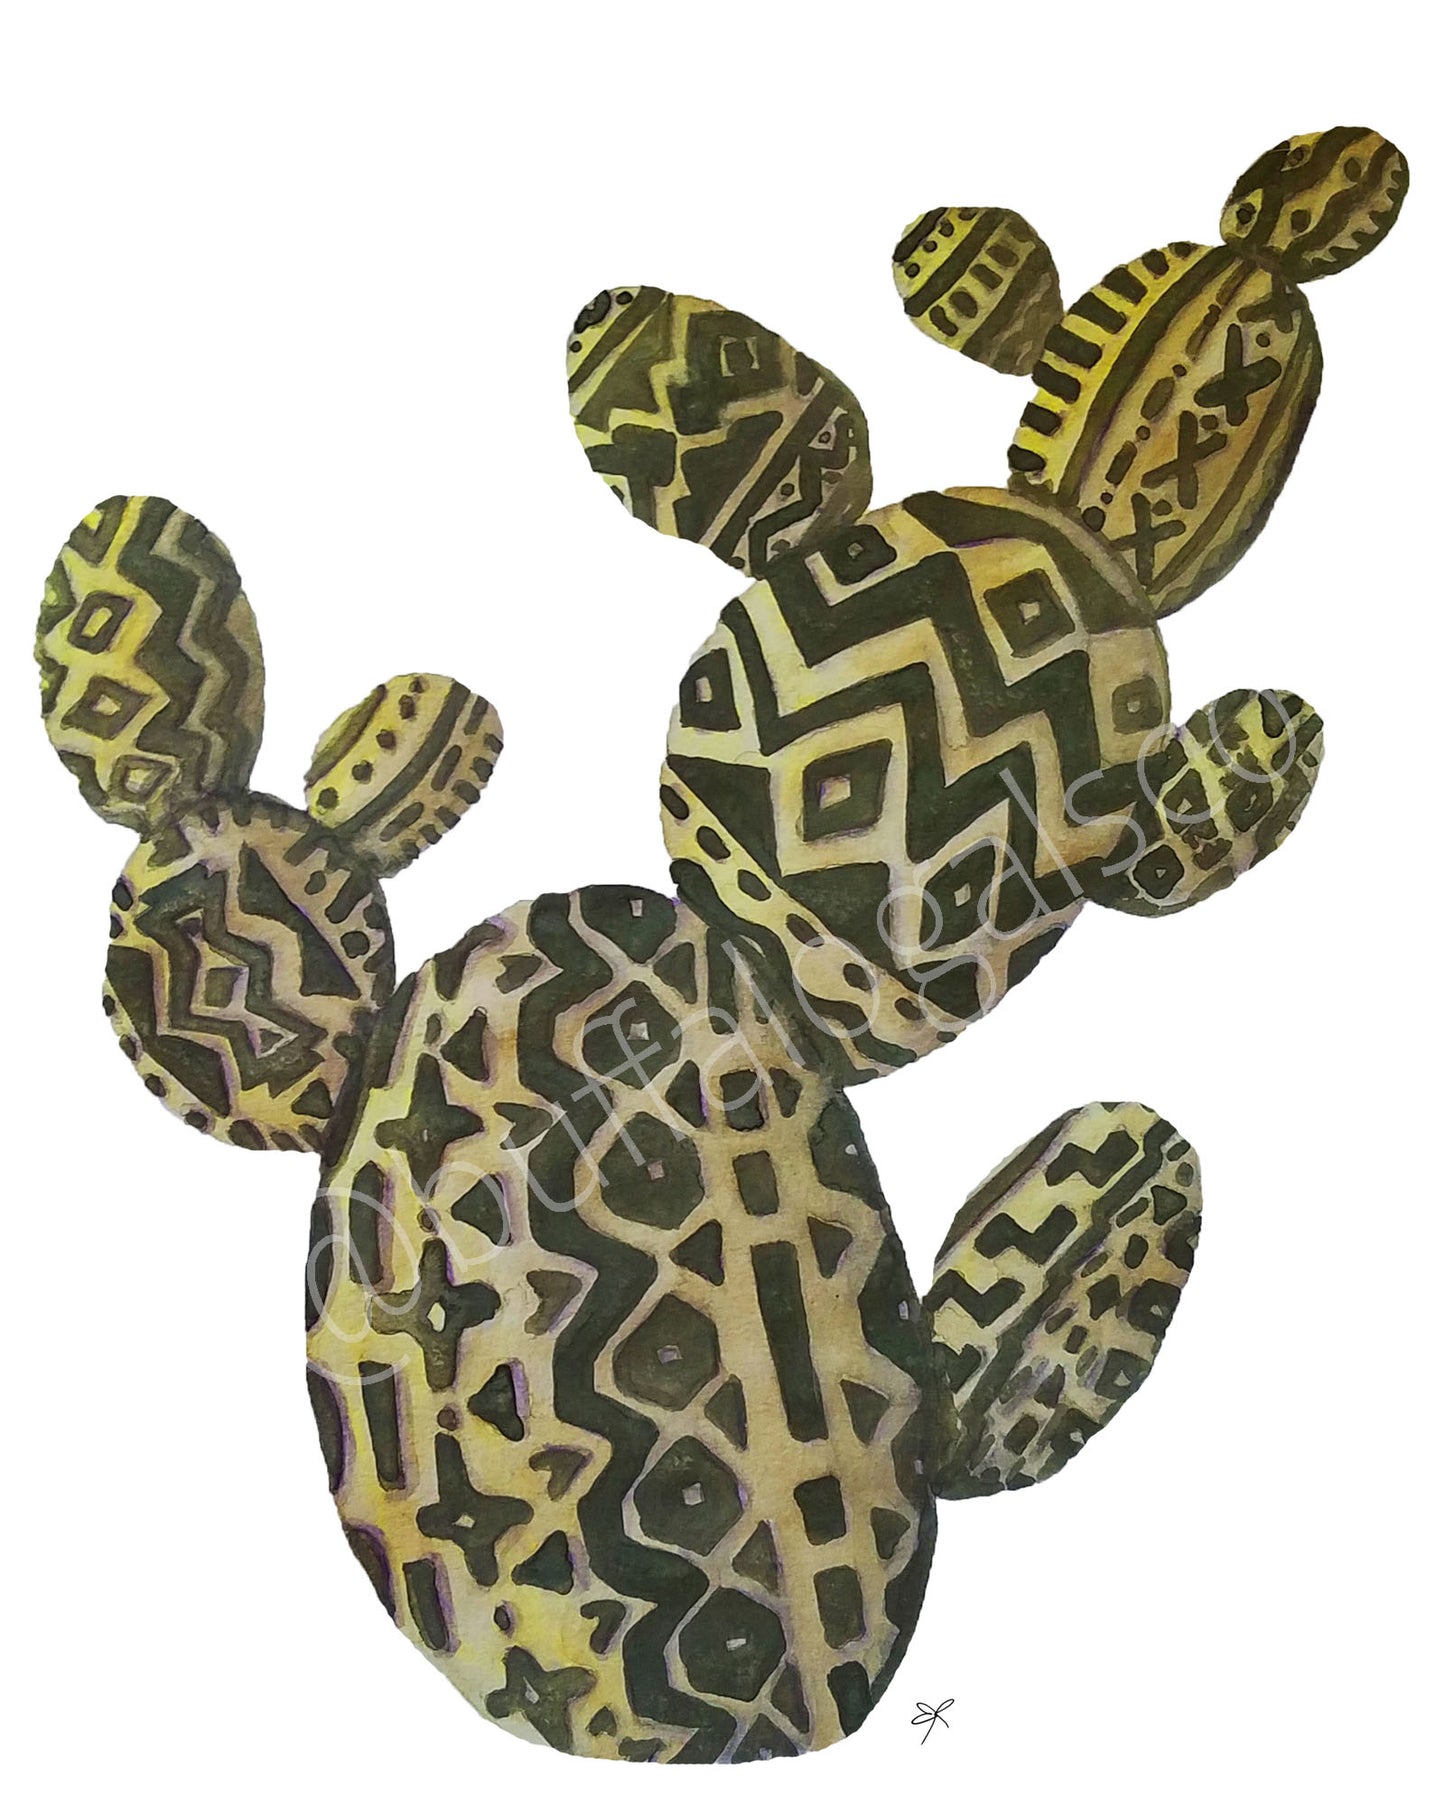 Aztec Prickly Pear Print